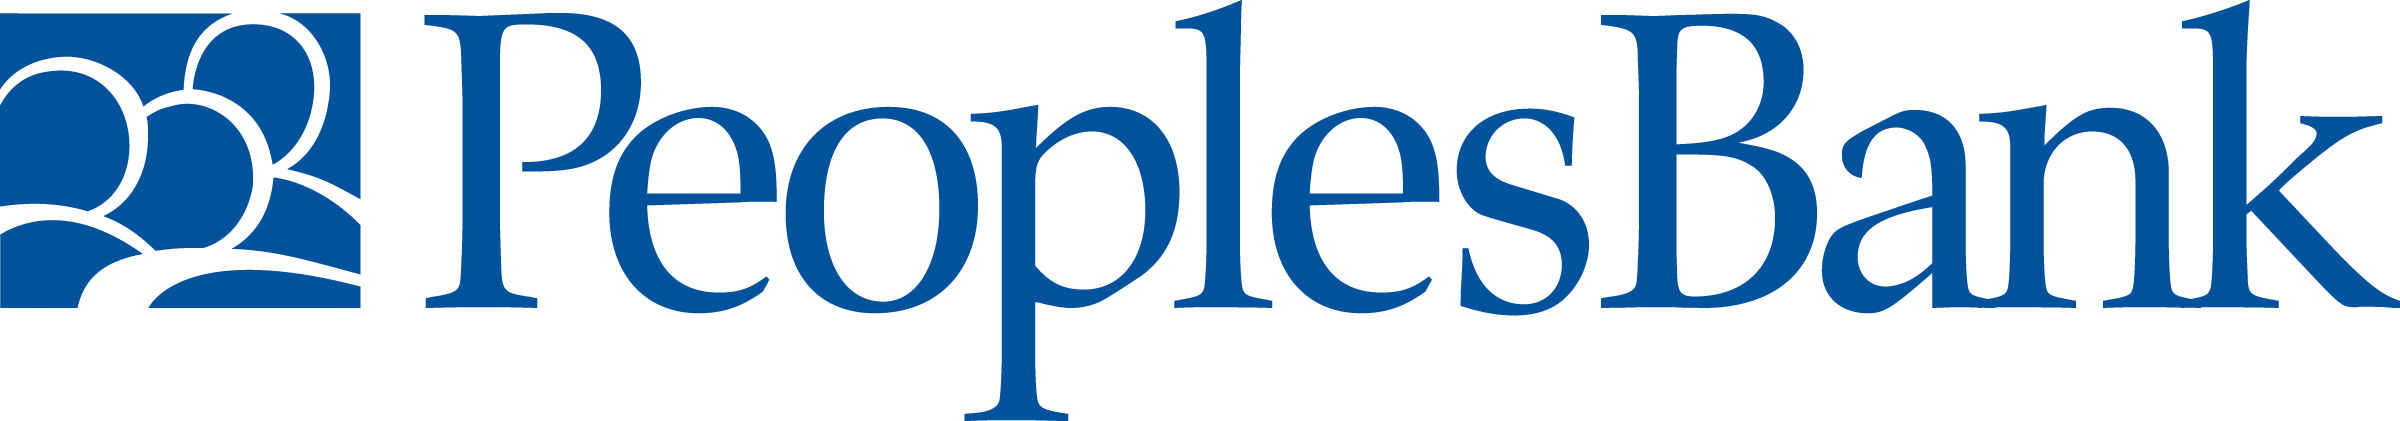 PeoplesBank-logo-287 (2).png